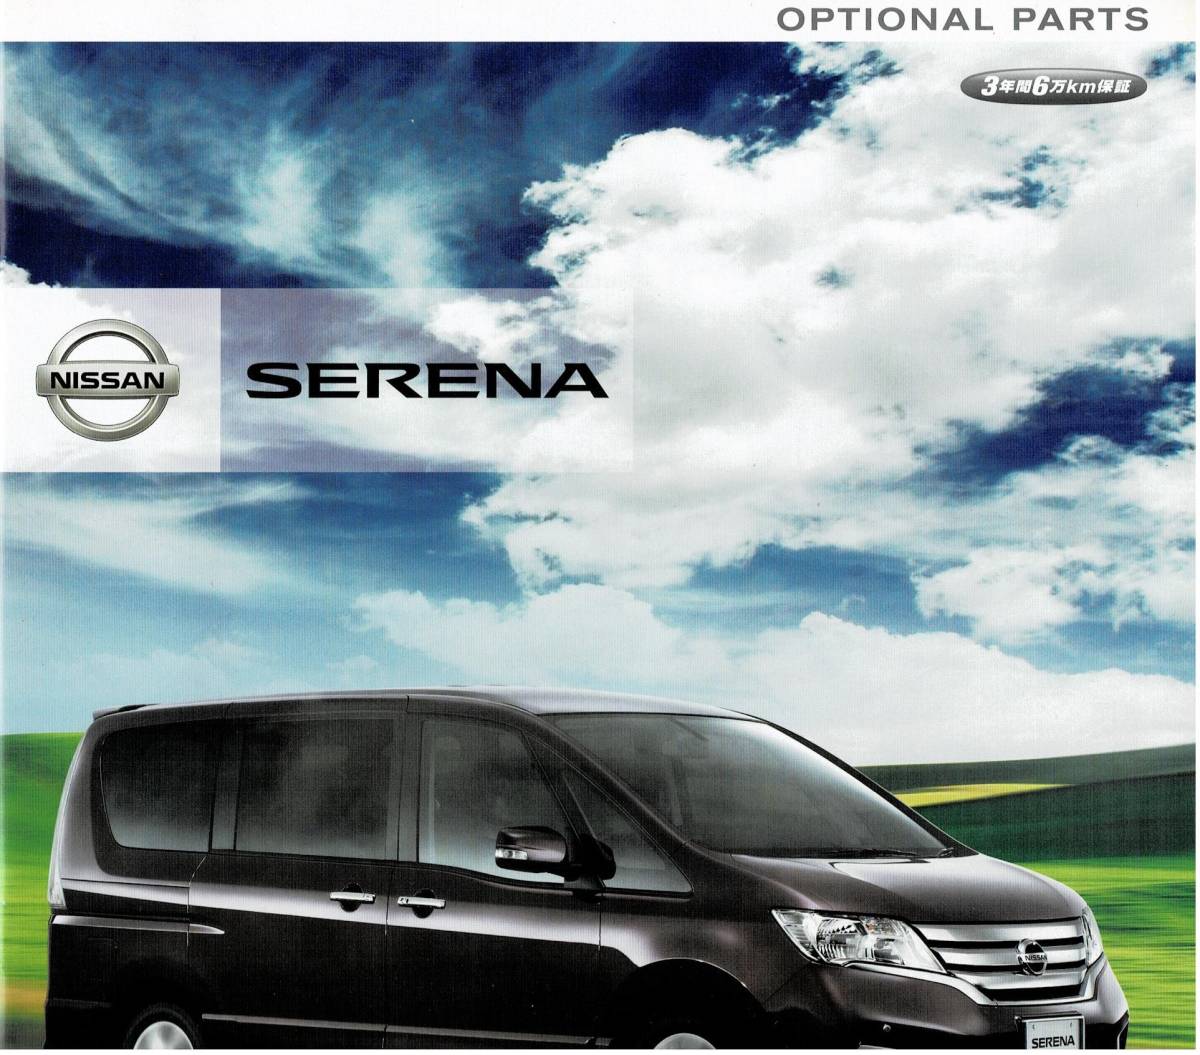  Nissan Serena каталог +OP SERENA